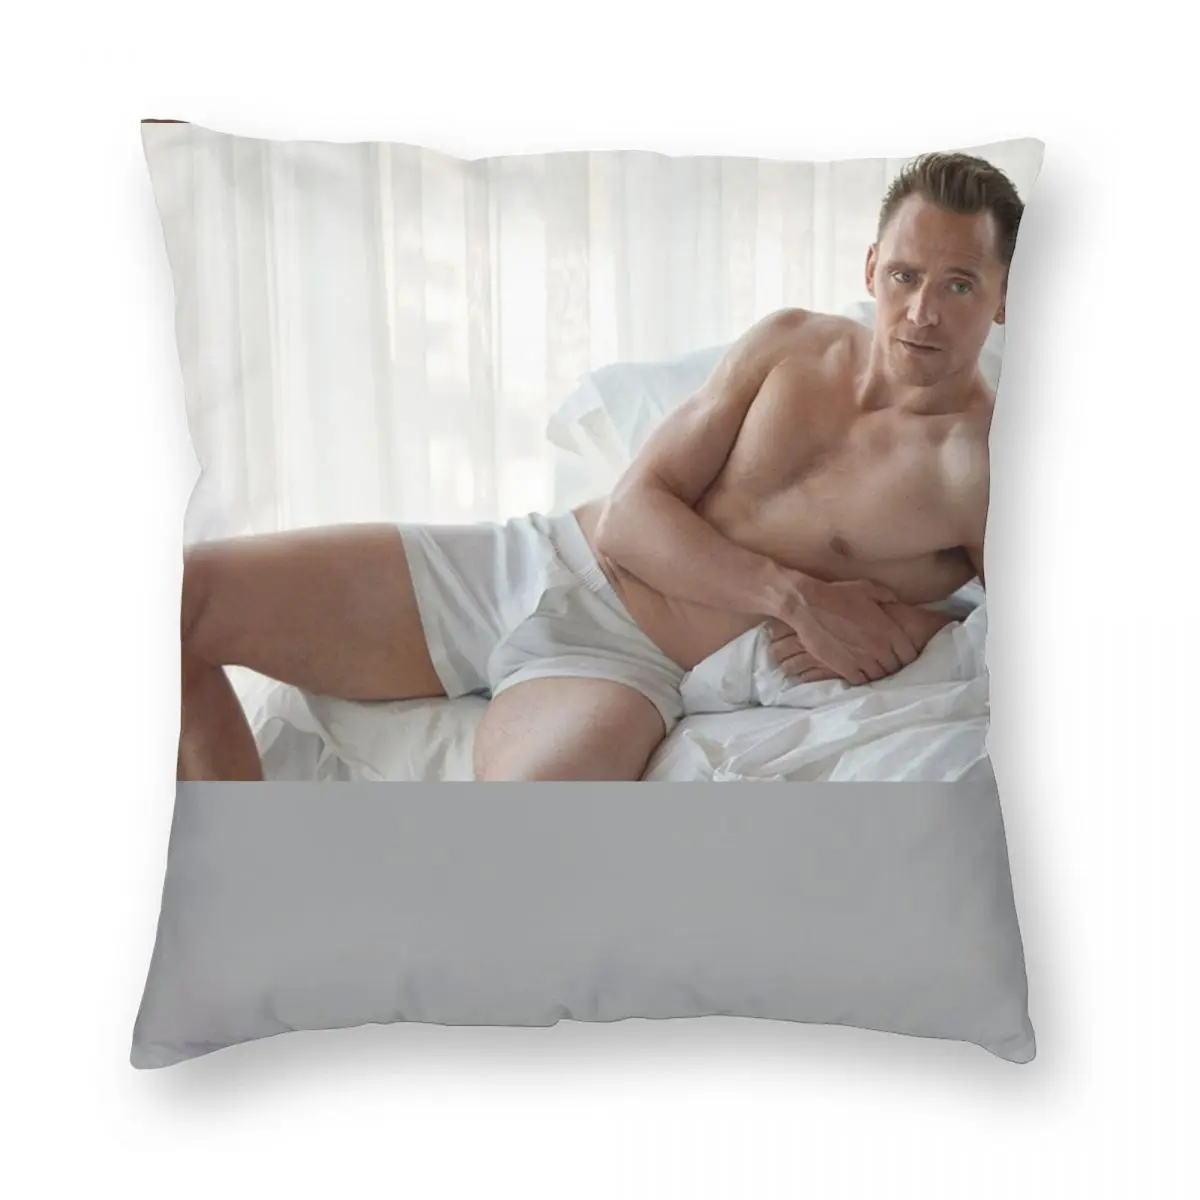 

Tom Hiddleston Thor Actor Pillowcase Printed Fabric Cushion Cover Decor Throw Pillow Case Cover Home Square 18''